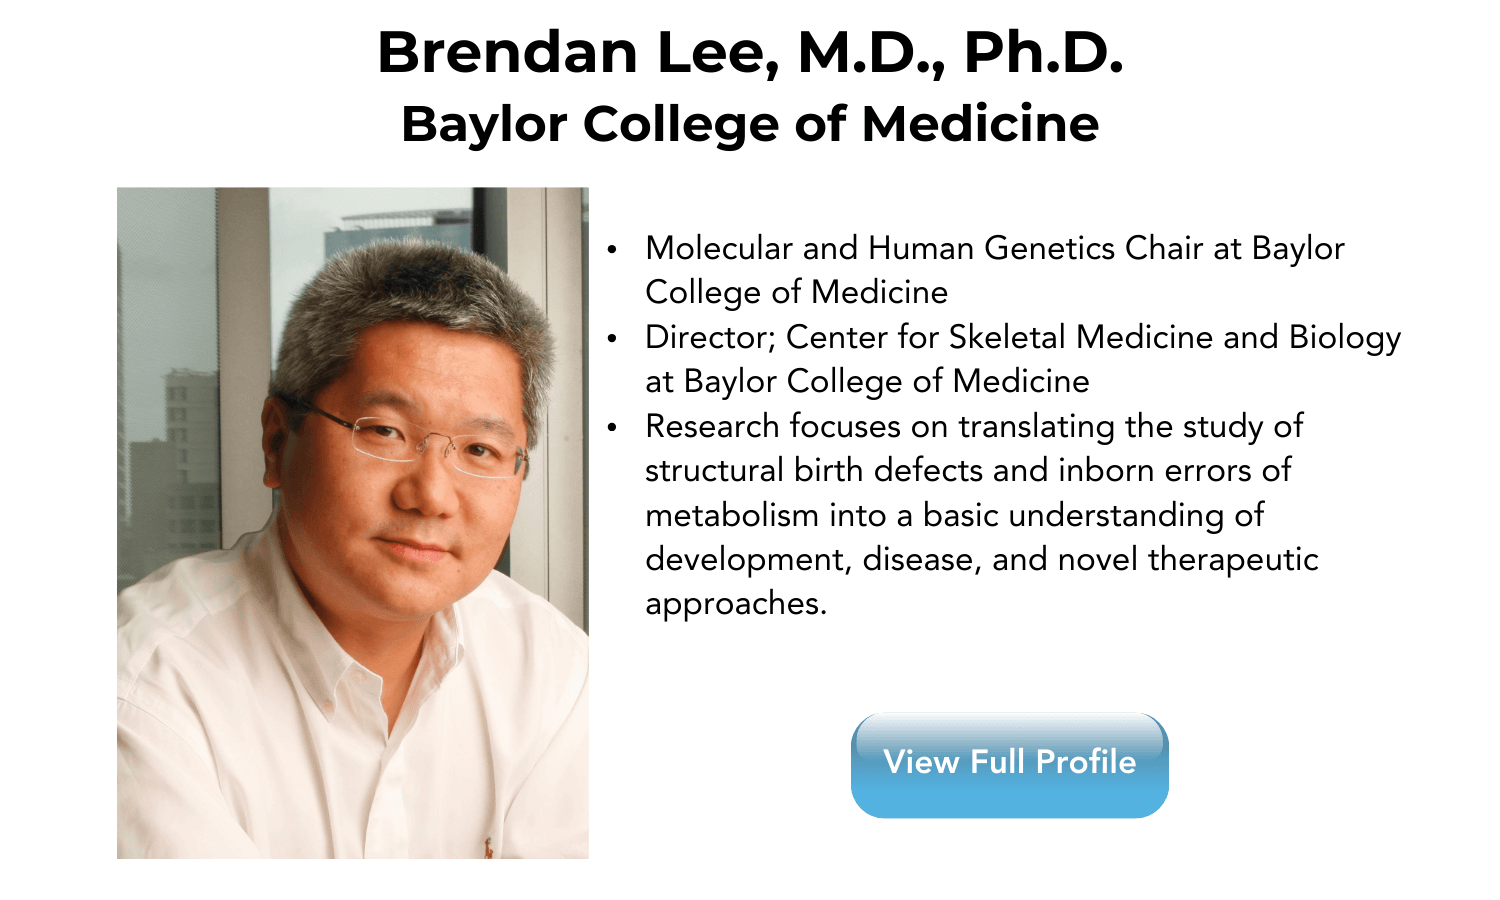 Dr. Brendan Lee, M.D., Ph.D.